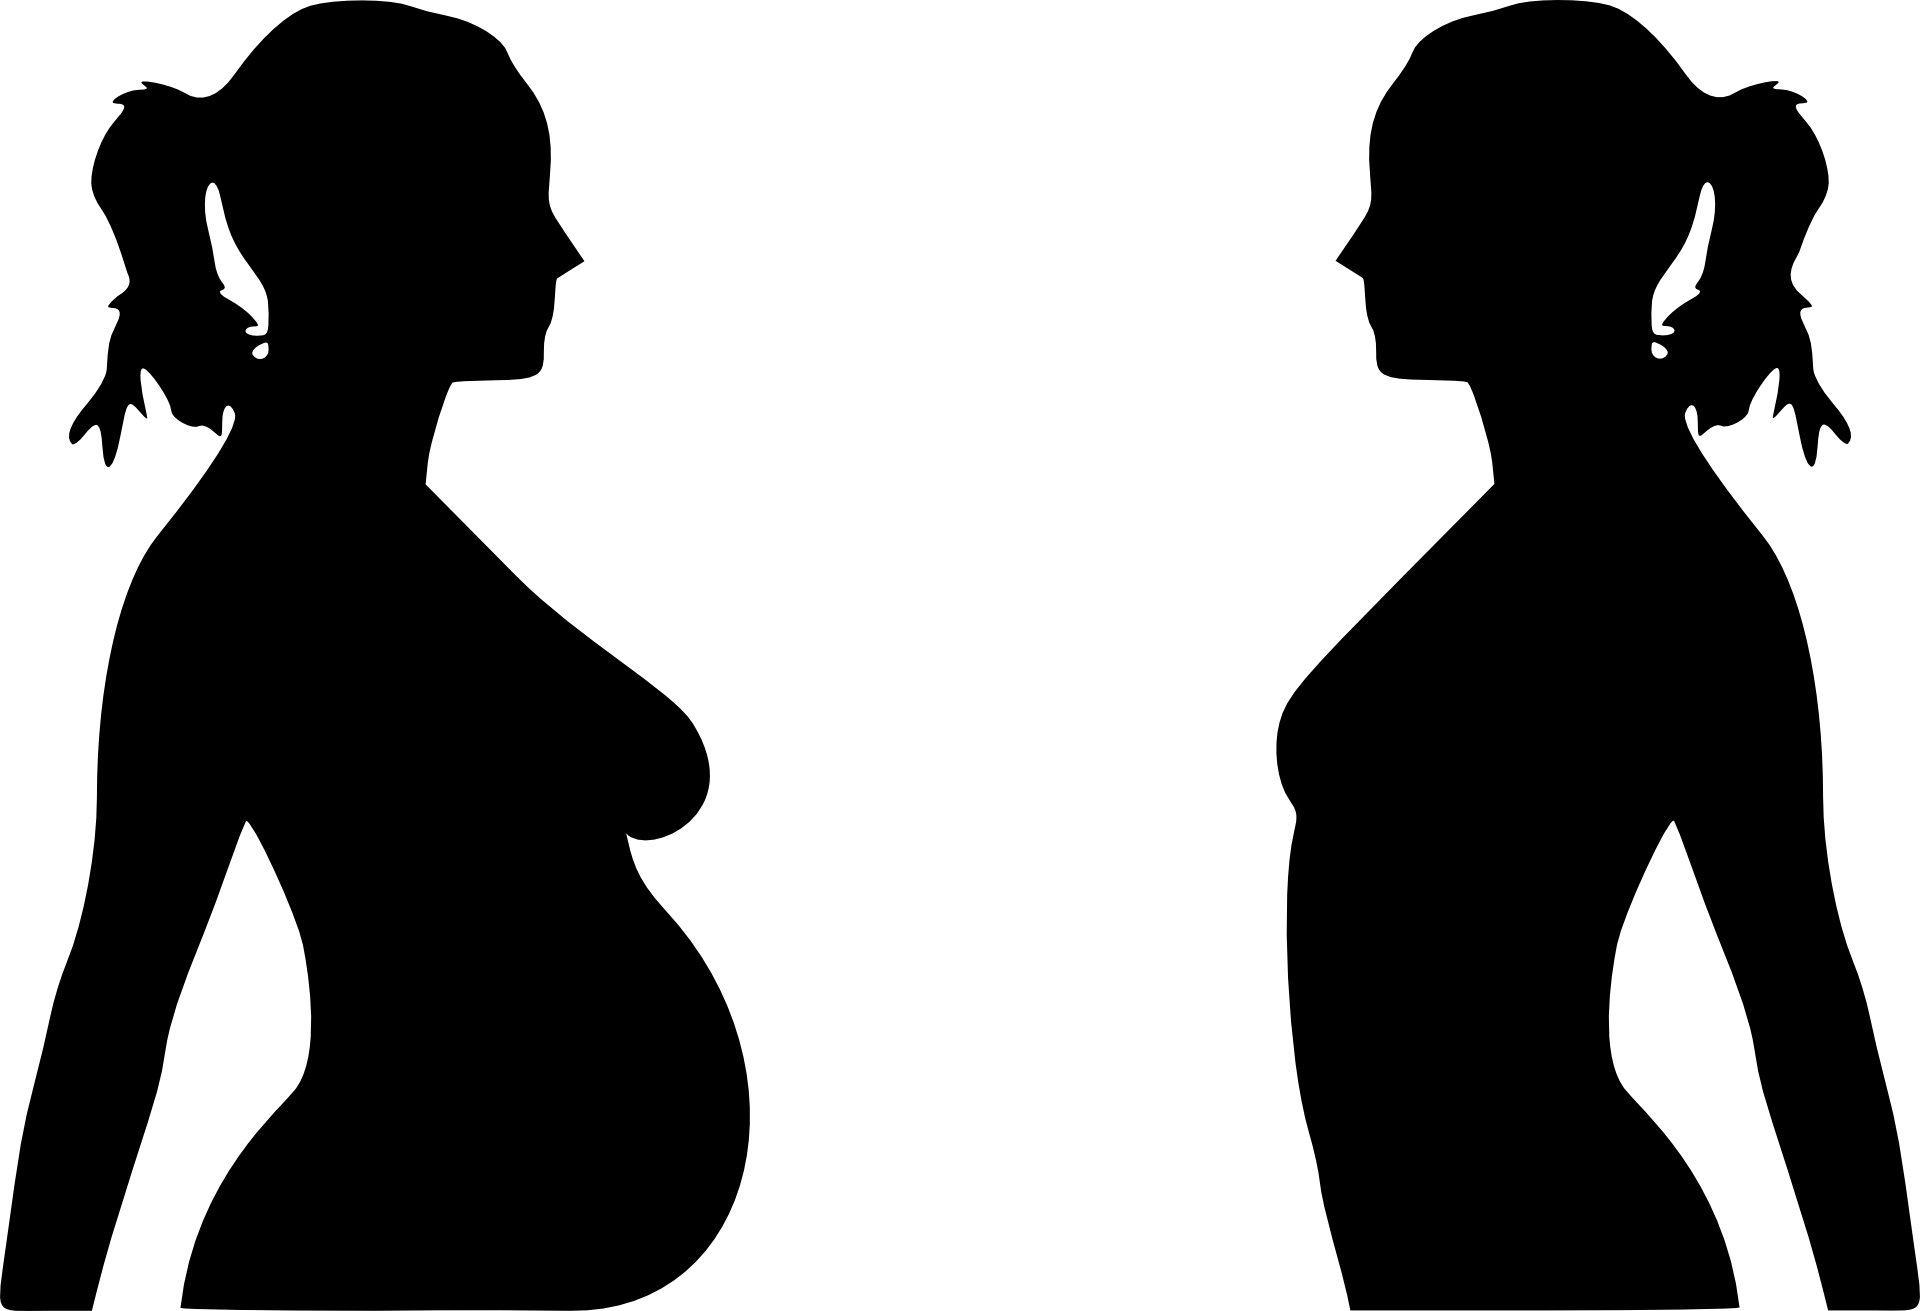 Pregnant Woman Silhouette Clip Art Free N21 free image.